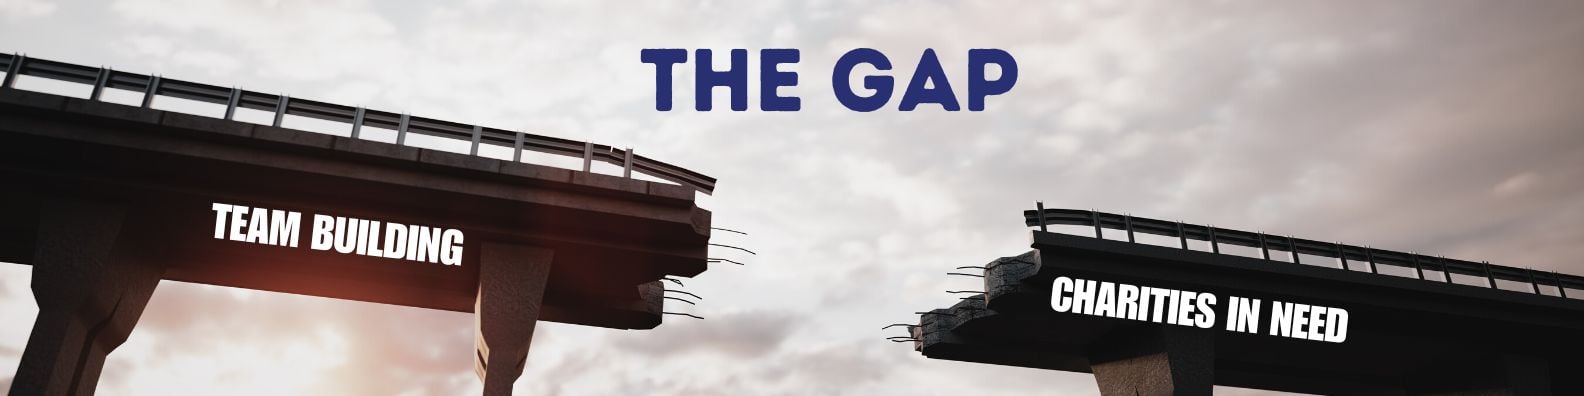 The Gap Banner